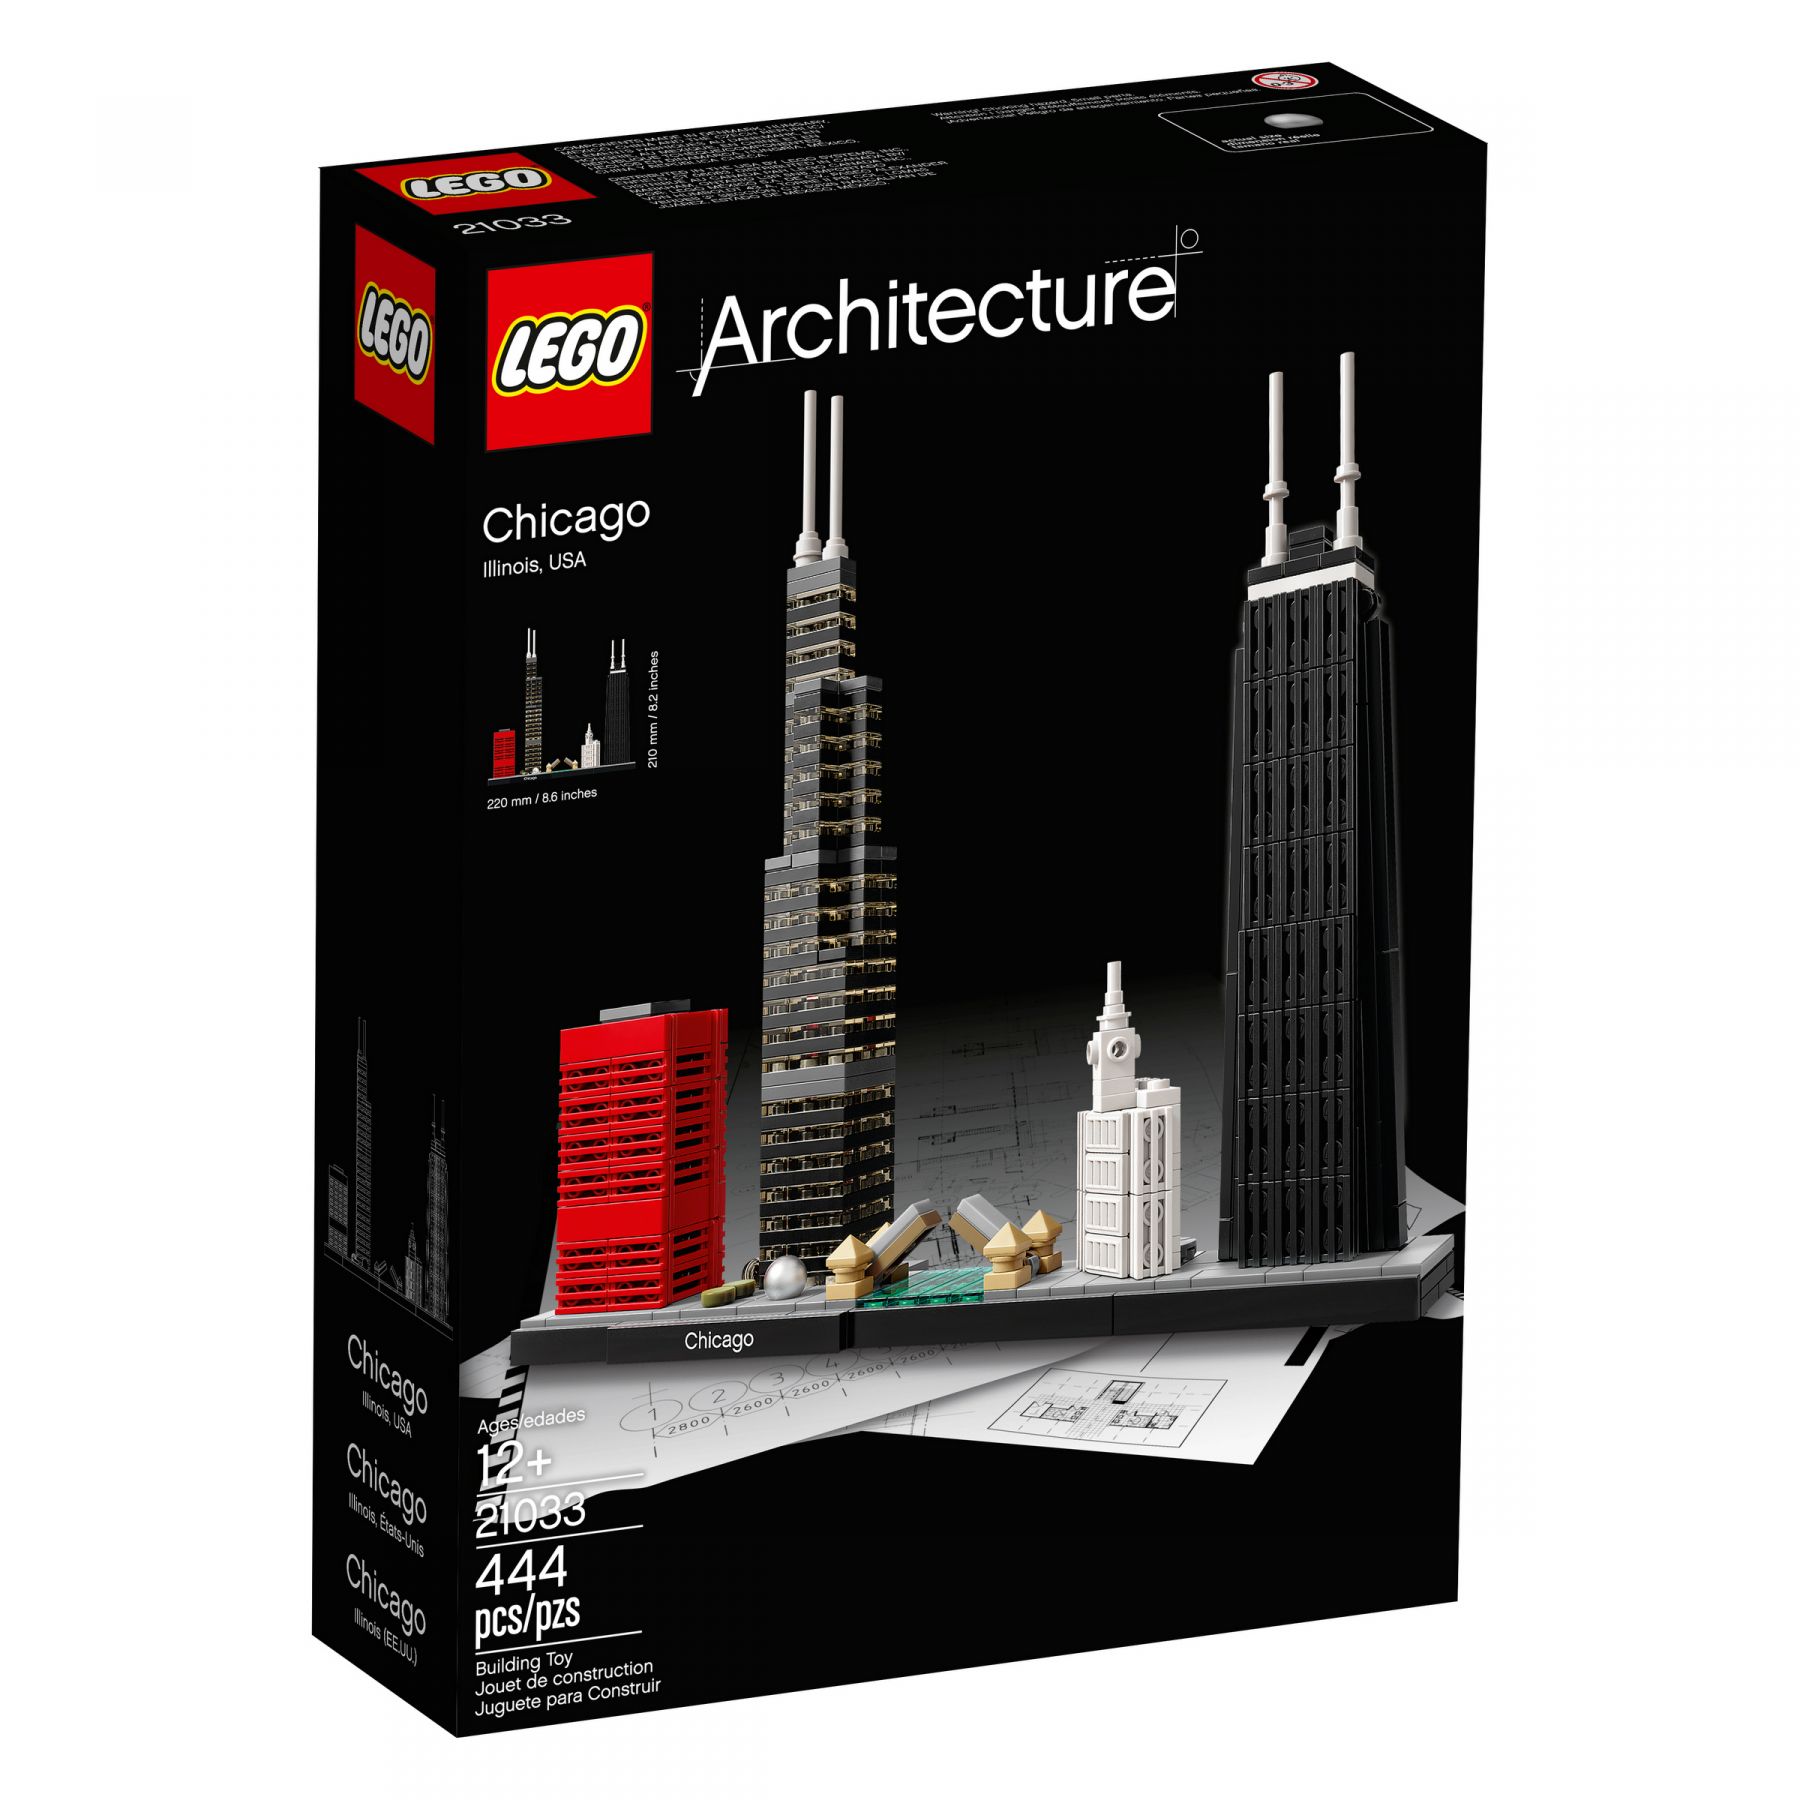 LEGO Architecture 21033 Chicago LEGO_21033_alt1.jpg